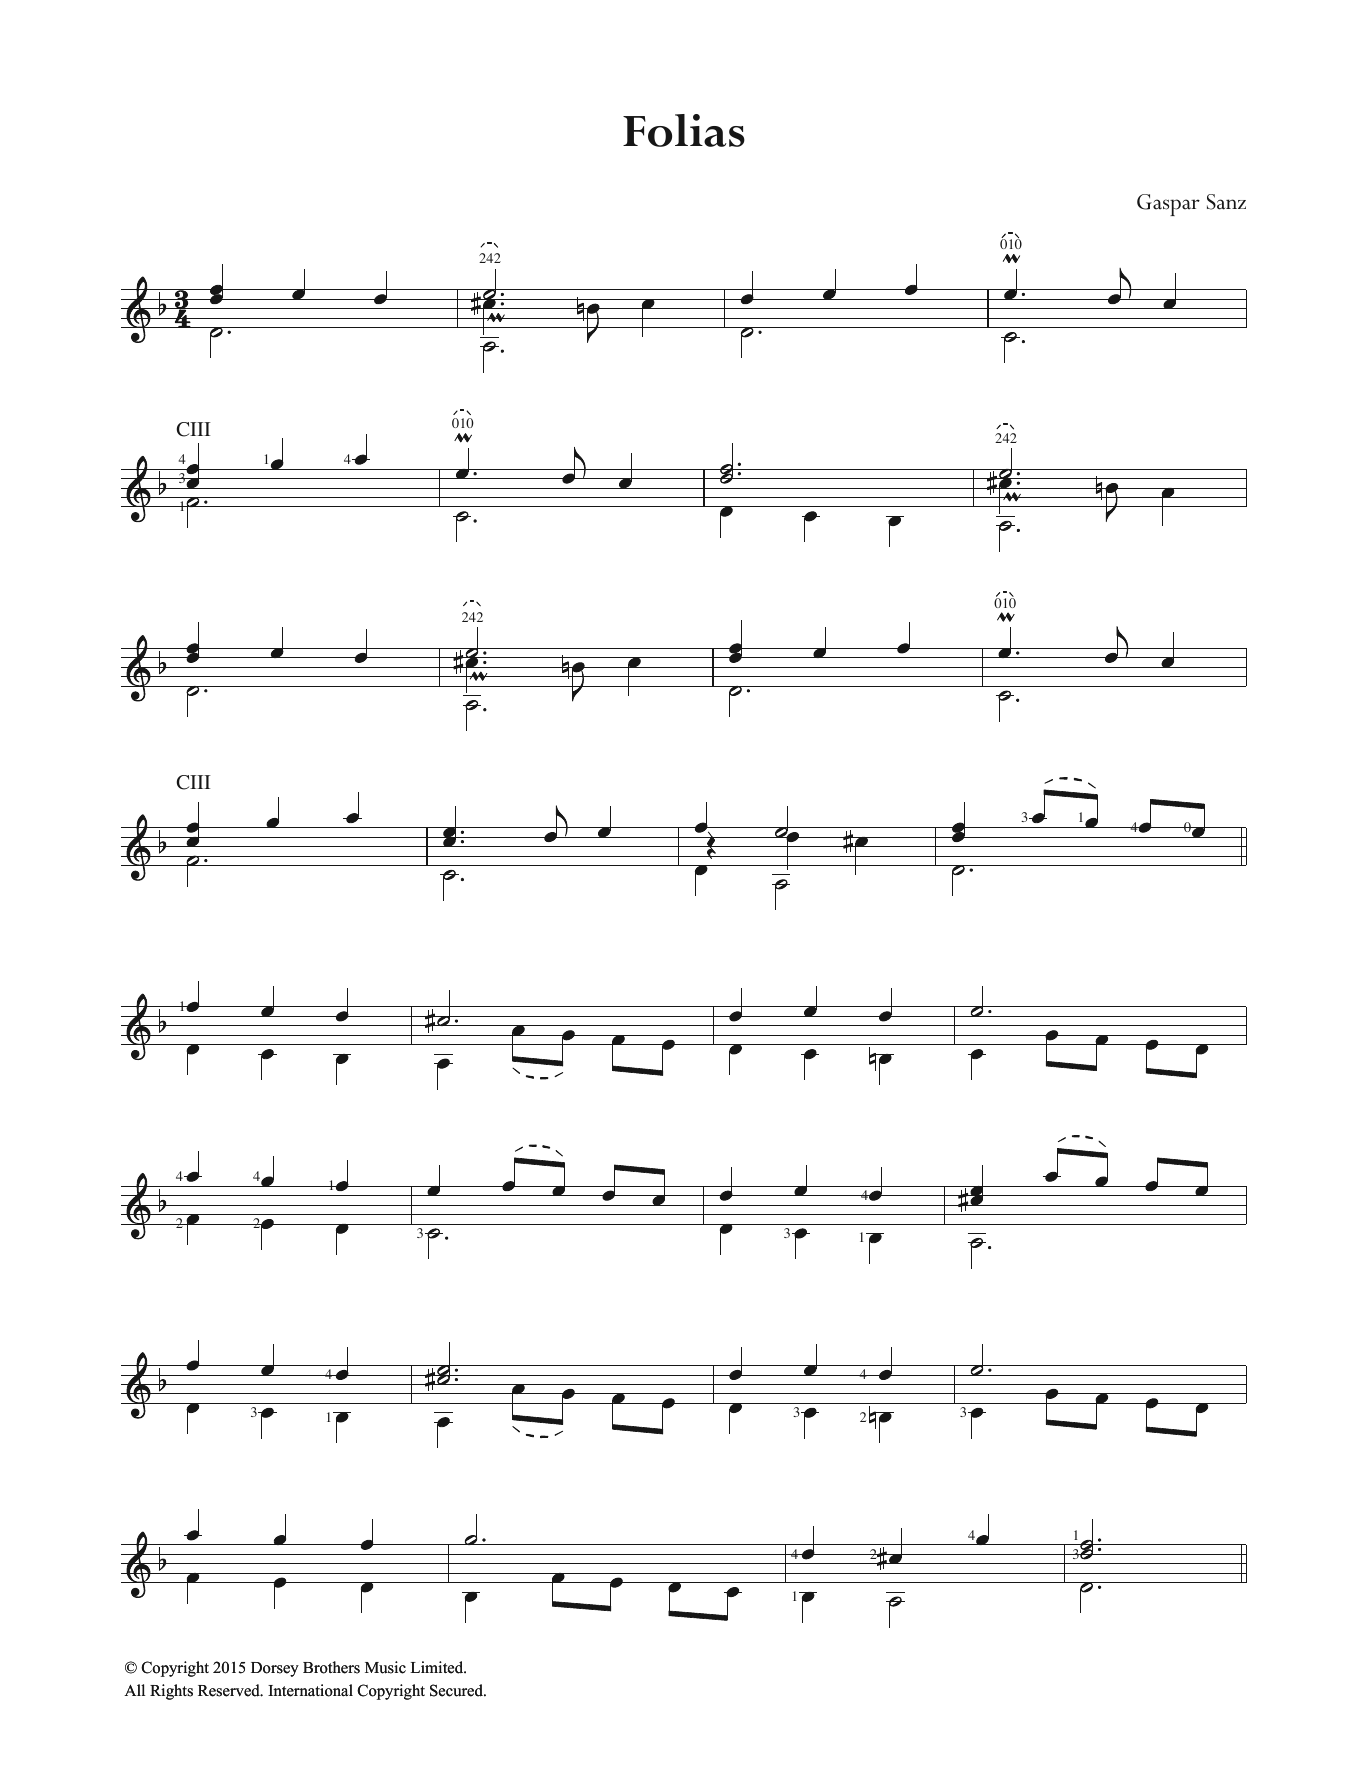 Gaspar Sanz Folias Sheet Music Notes & Chords for Guitar - Download or Print PDF